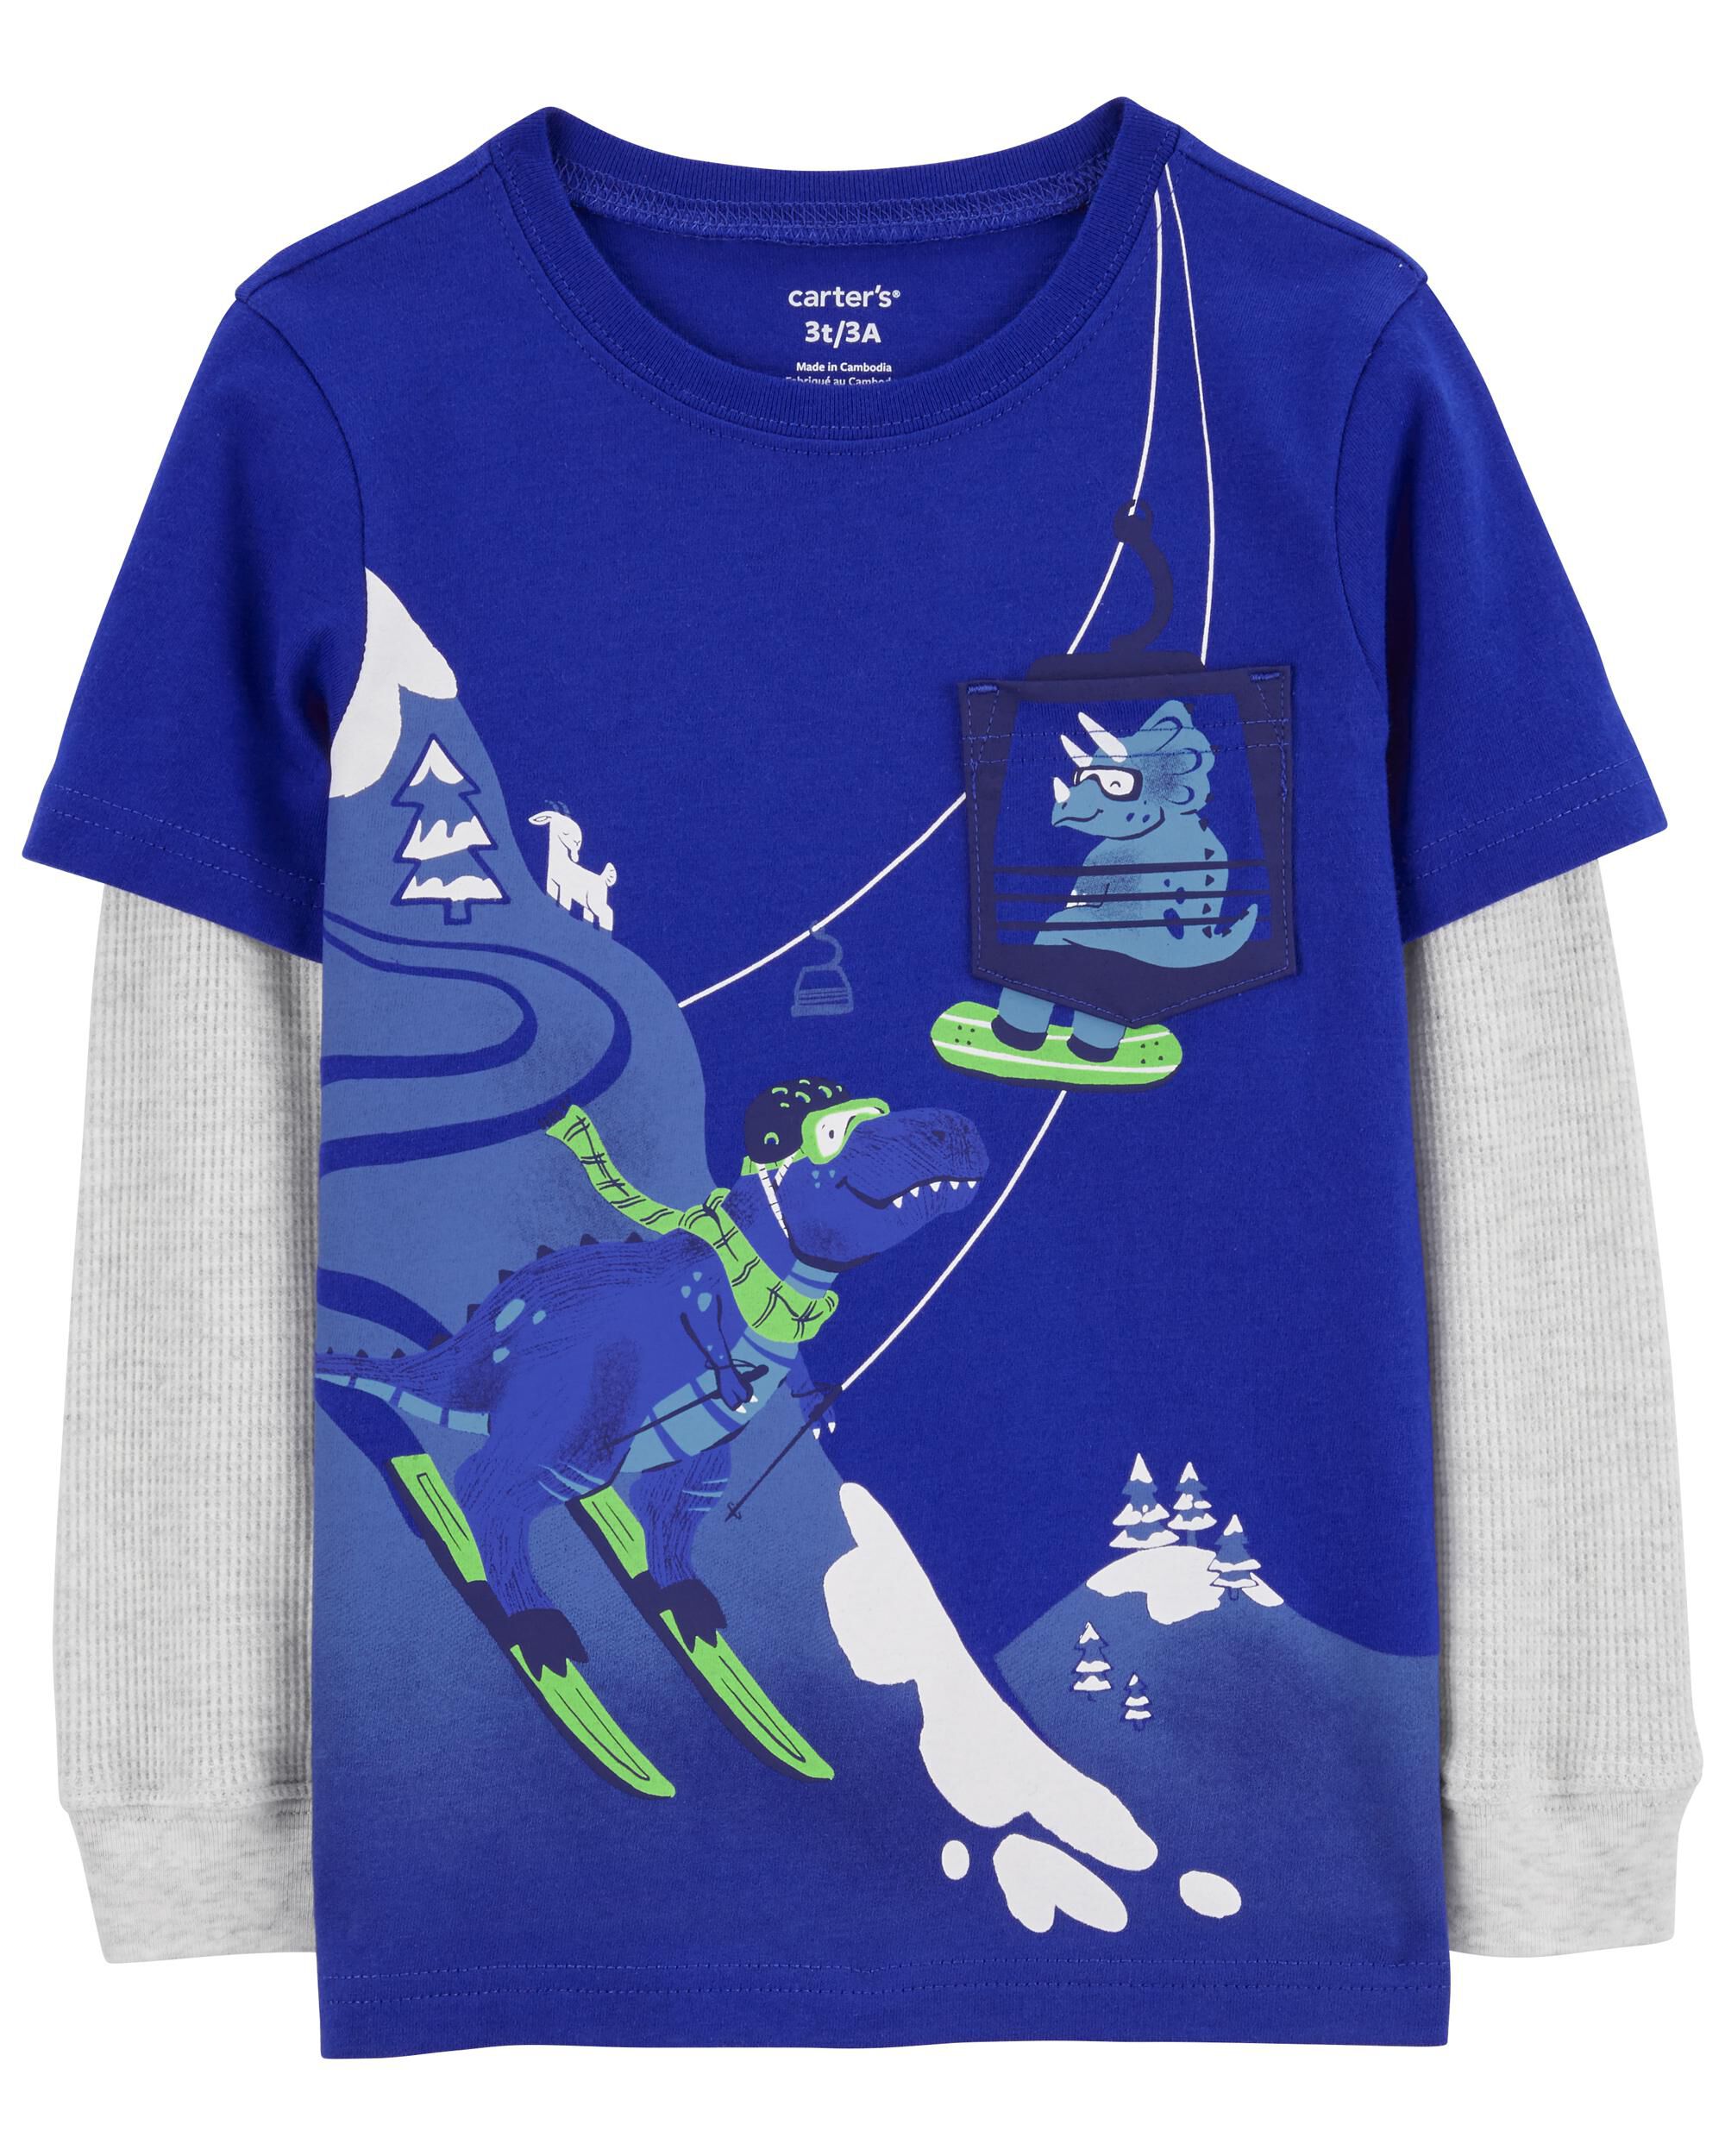 Многослойная лыжная футболка Baby Dinosaur Carter's